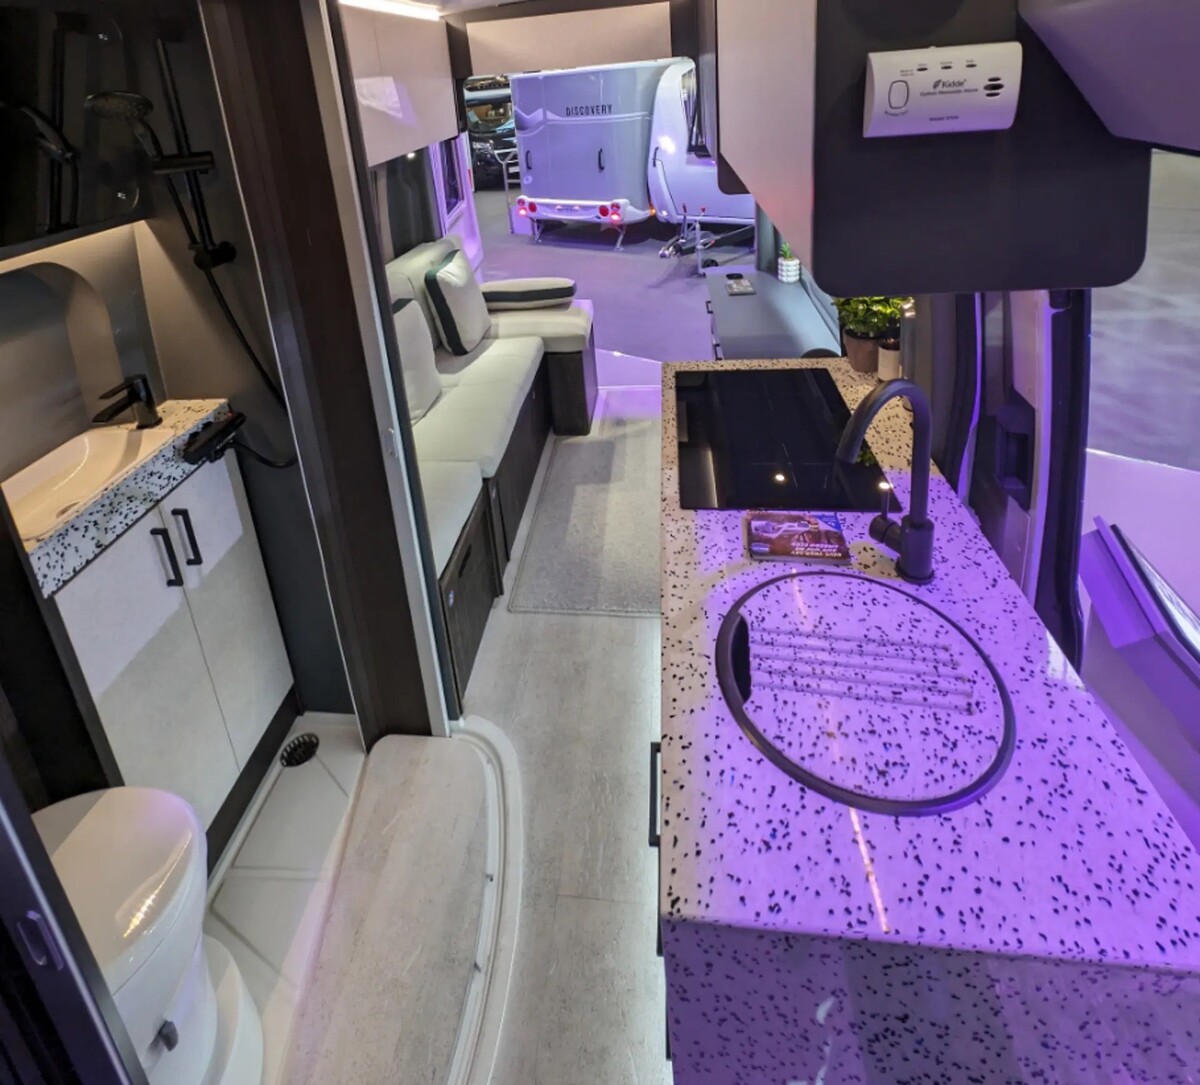 bailey introduces endeavour ev an all electric campervan concept for digital nomads 14